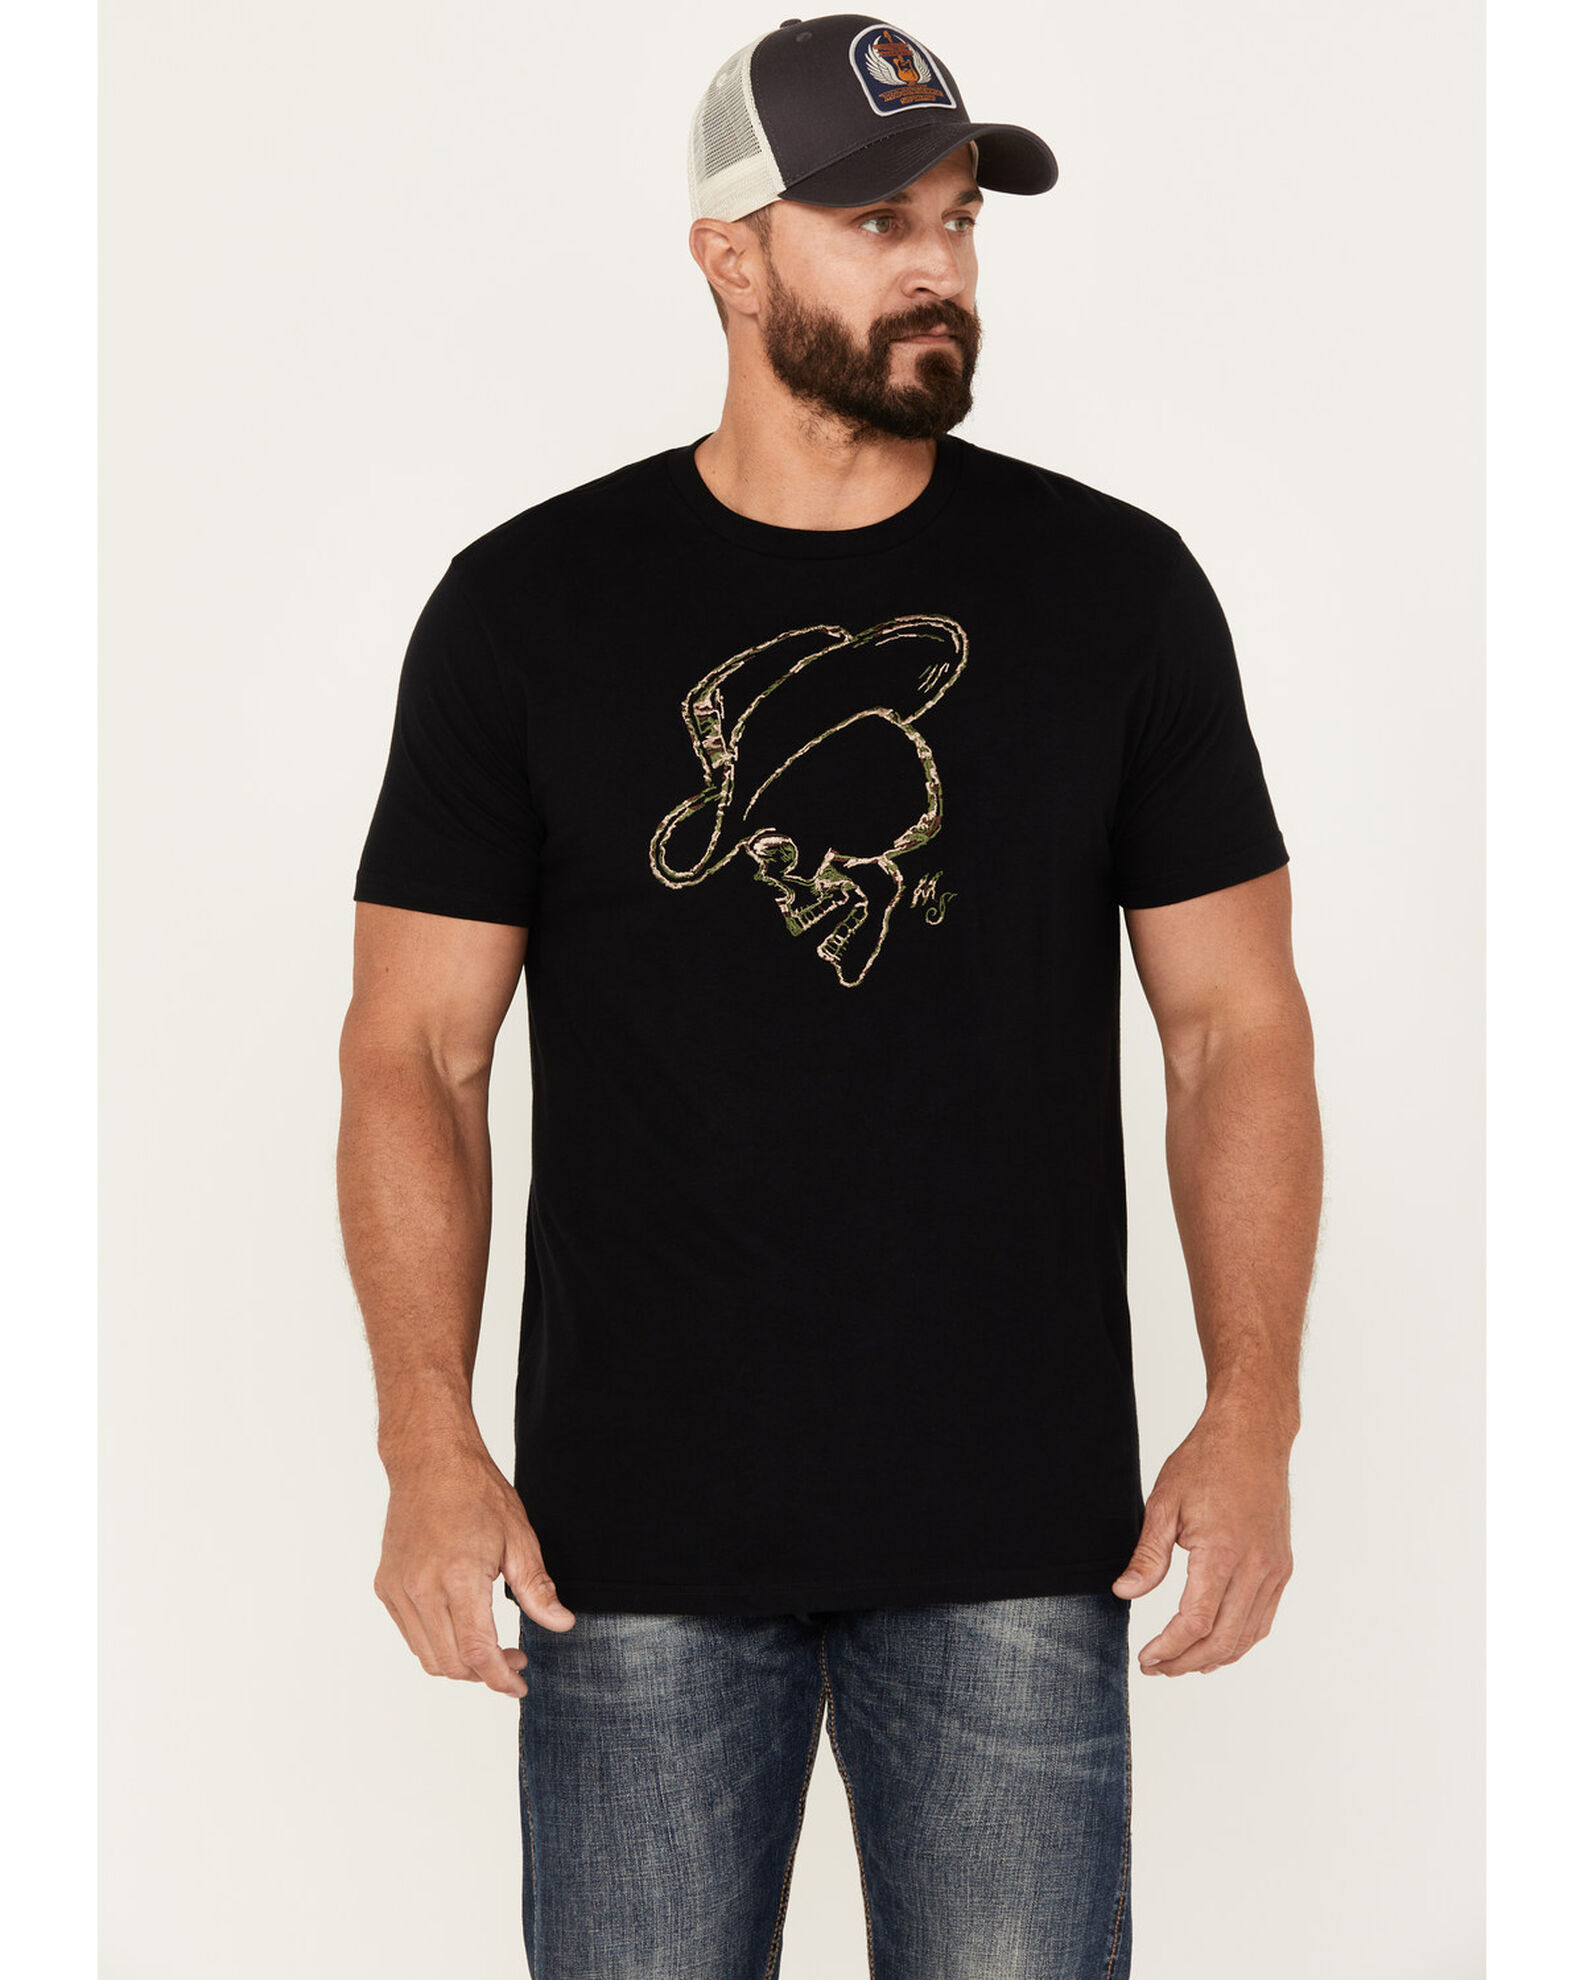 Moonshine Spirit Men's Camo Stitched Short Sleeve Graphic T-Shirt